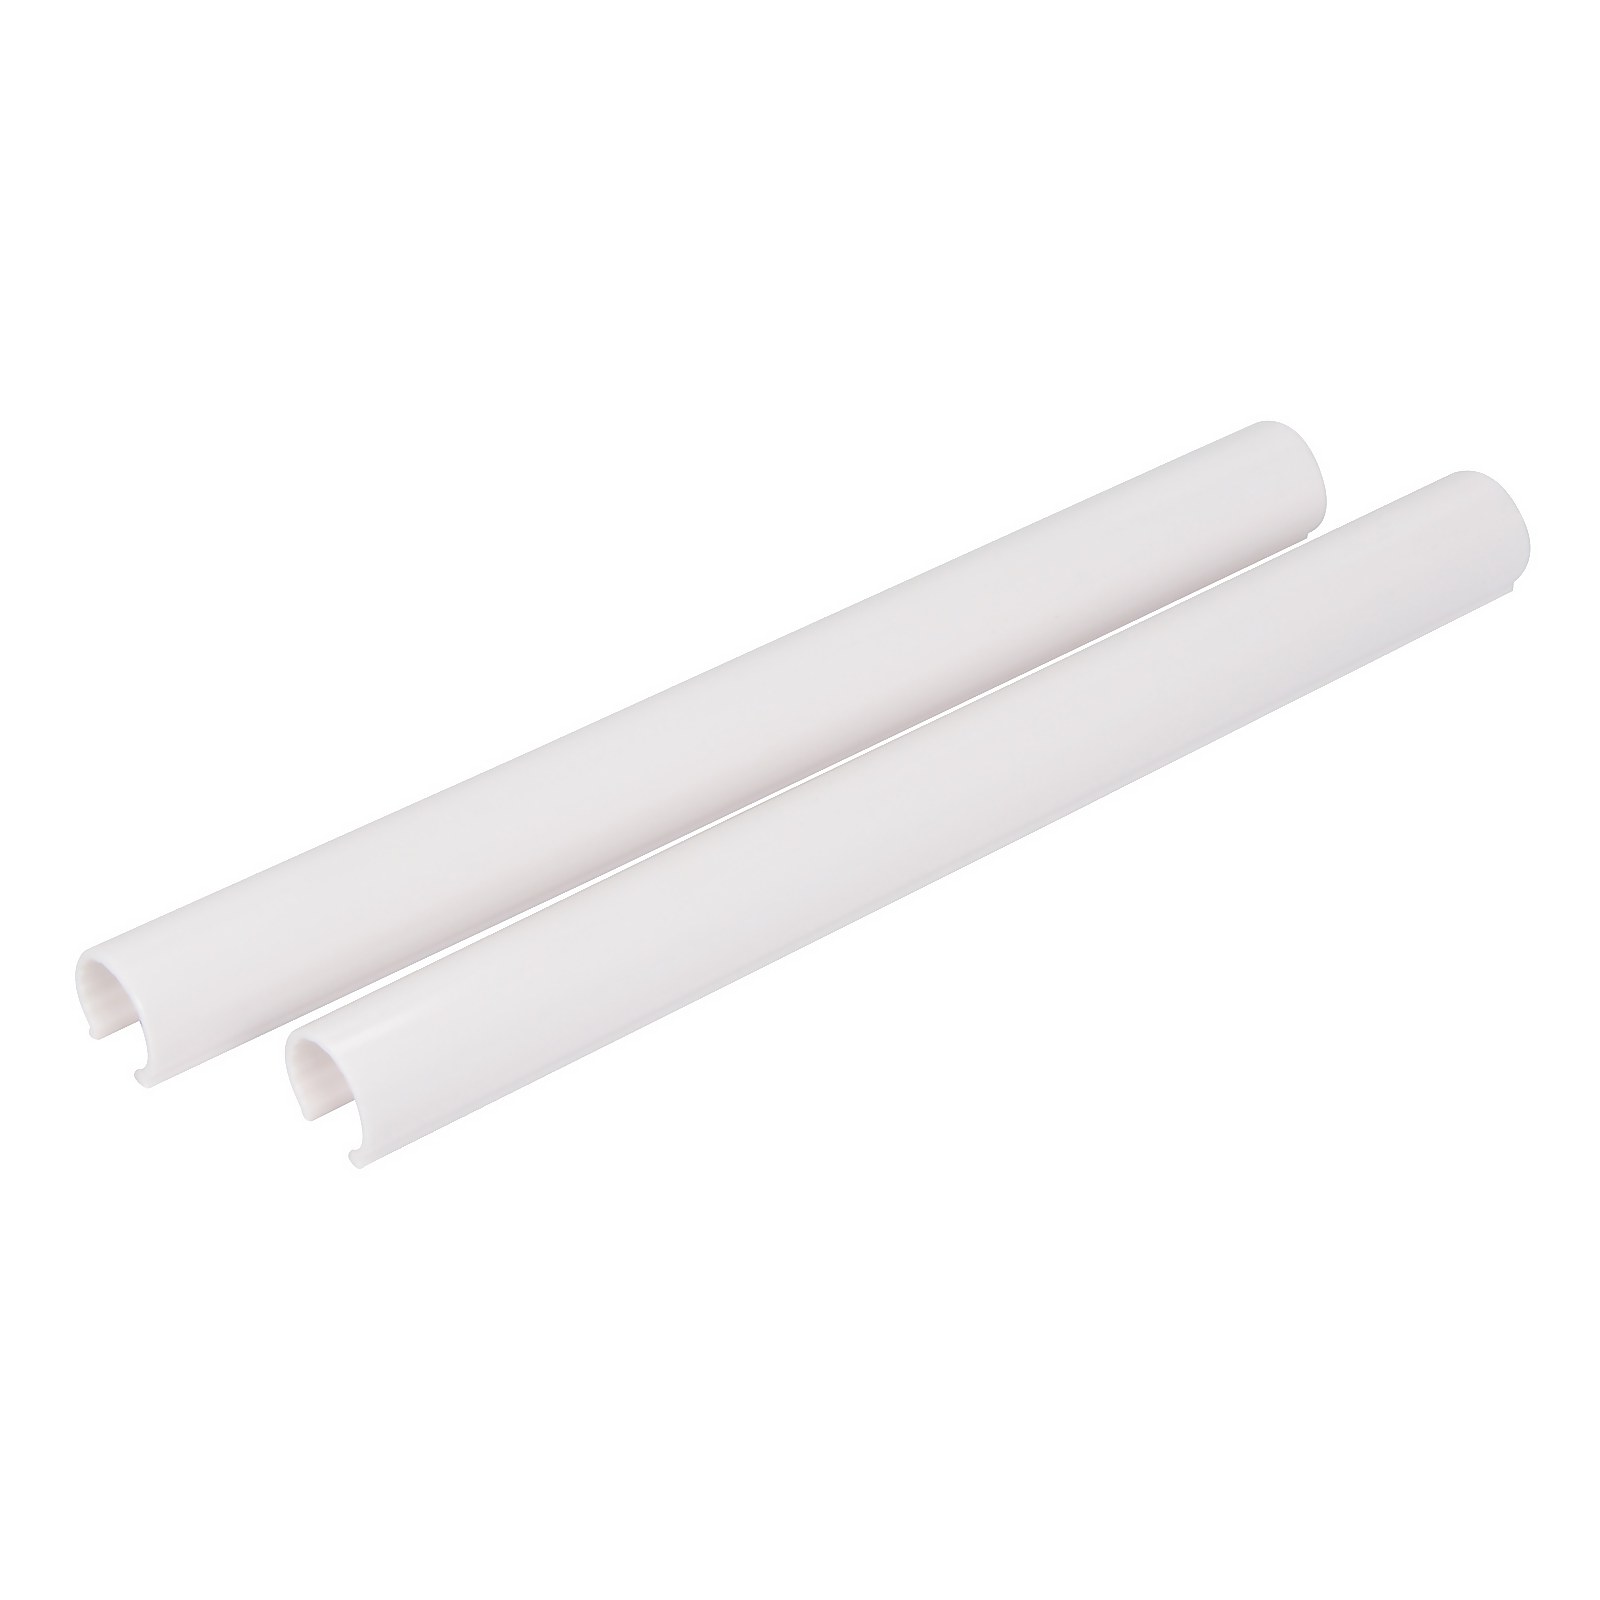 Photo of Vitrex White Plastic Pipe Covers